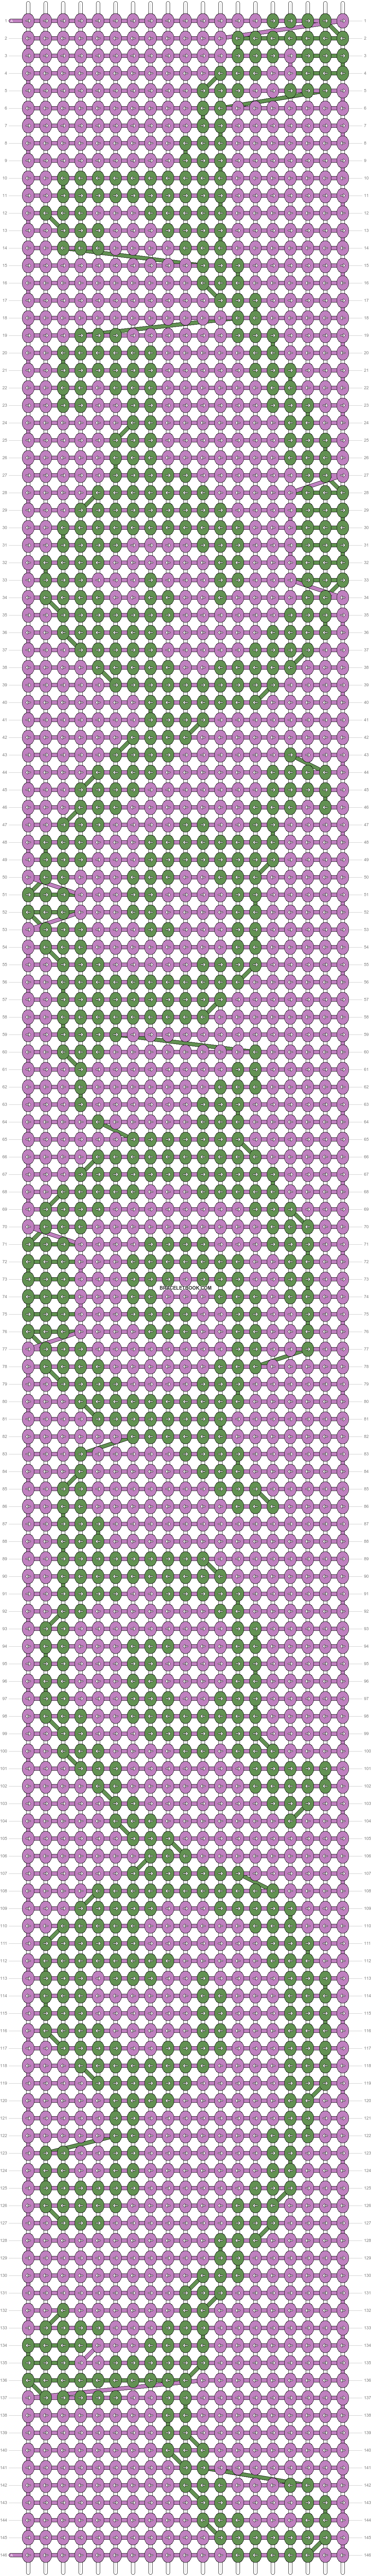 Alpha pattern #7229 variation #258450 pattern